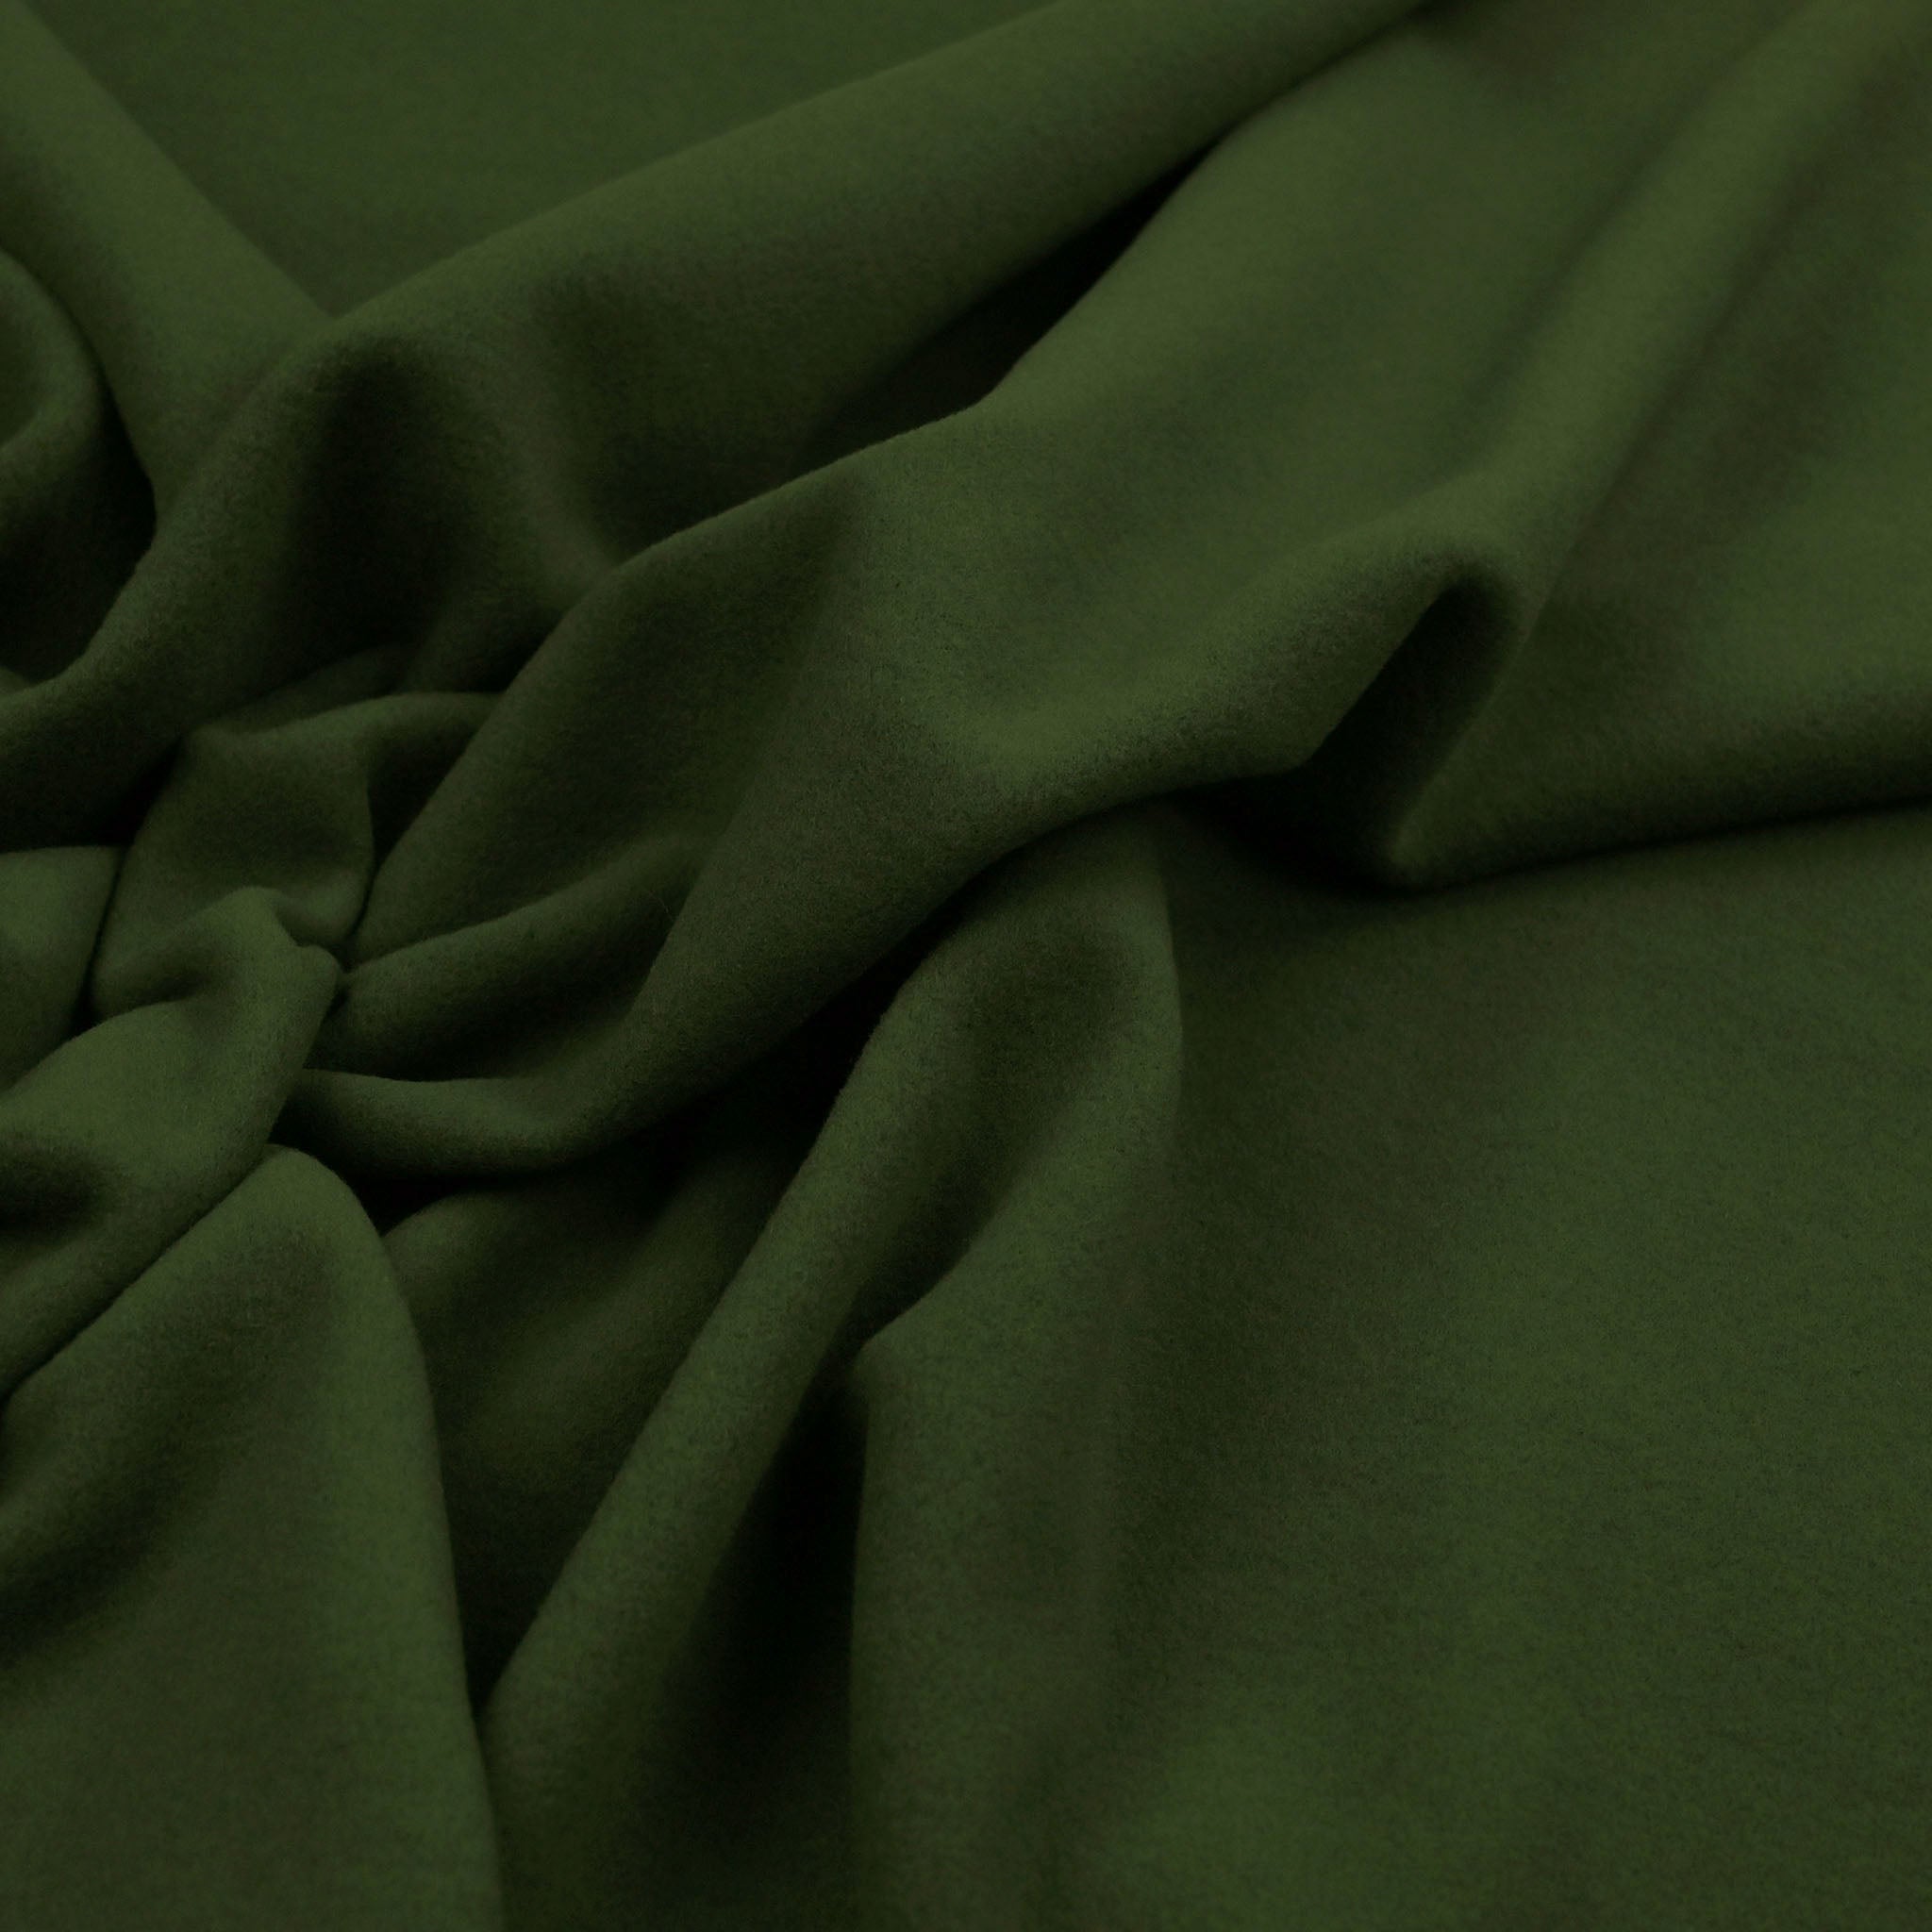 Bottle Green Coating Fabric 98294